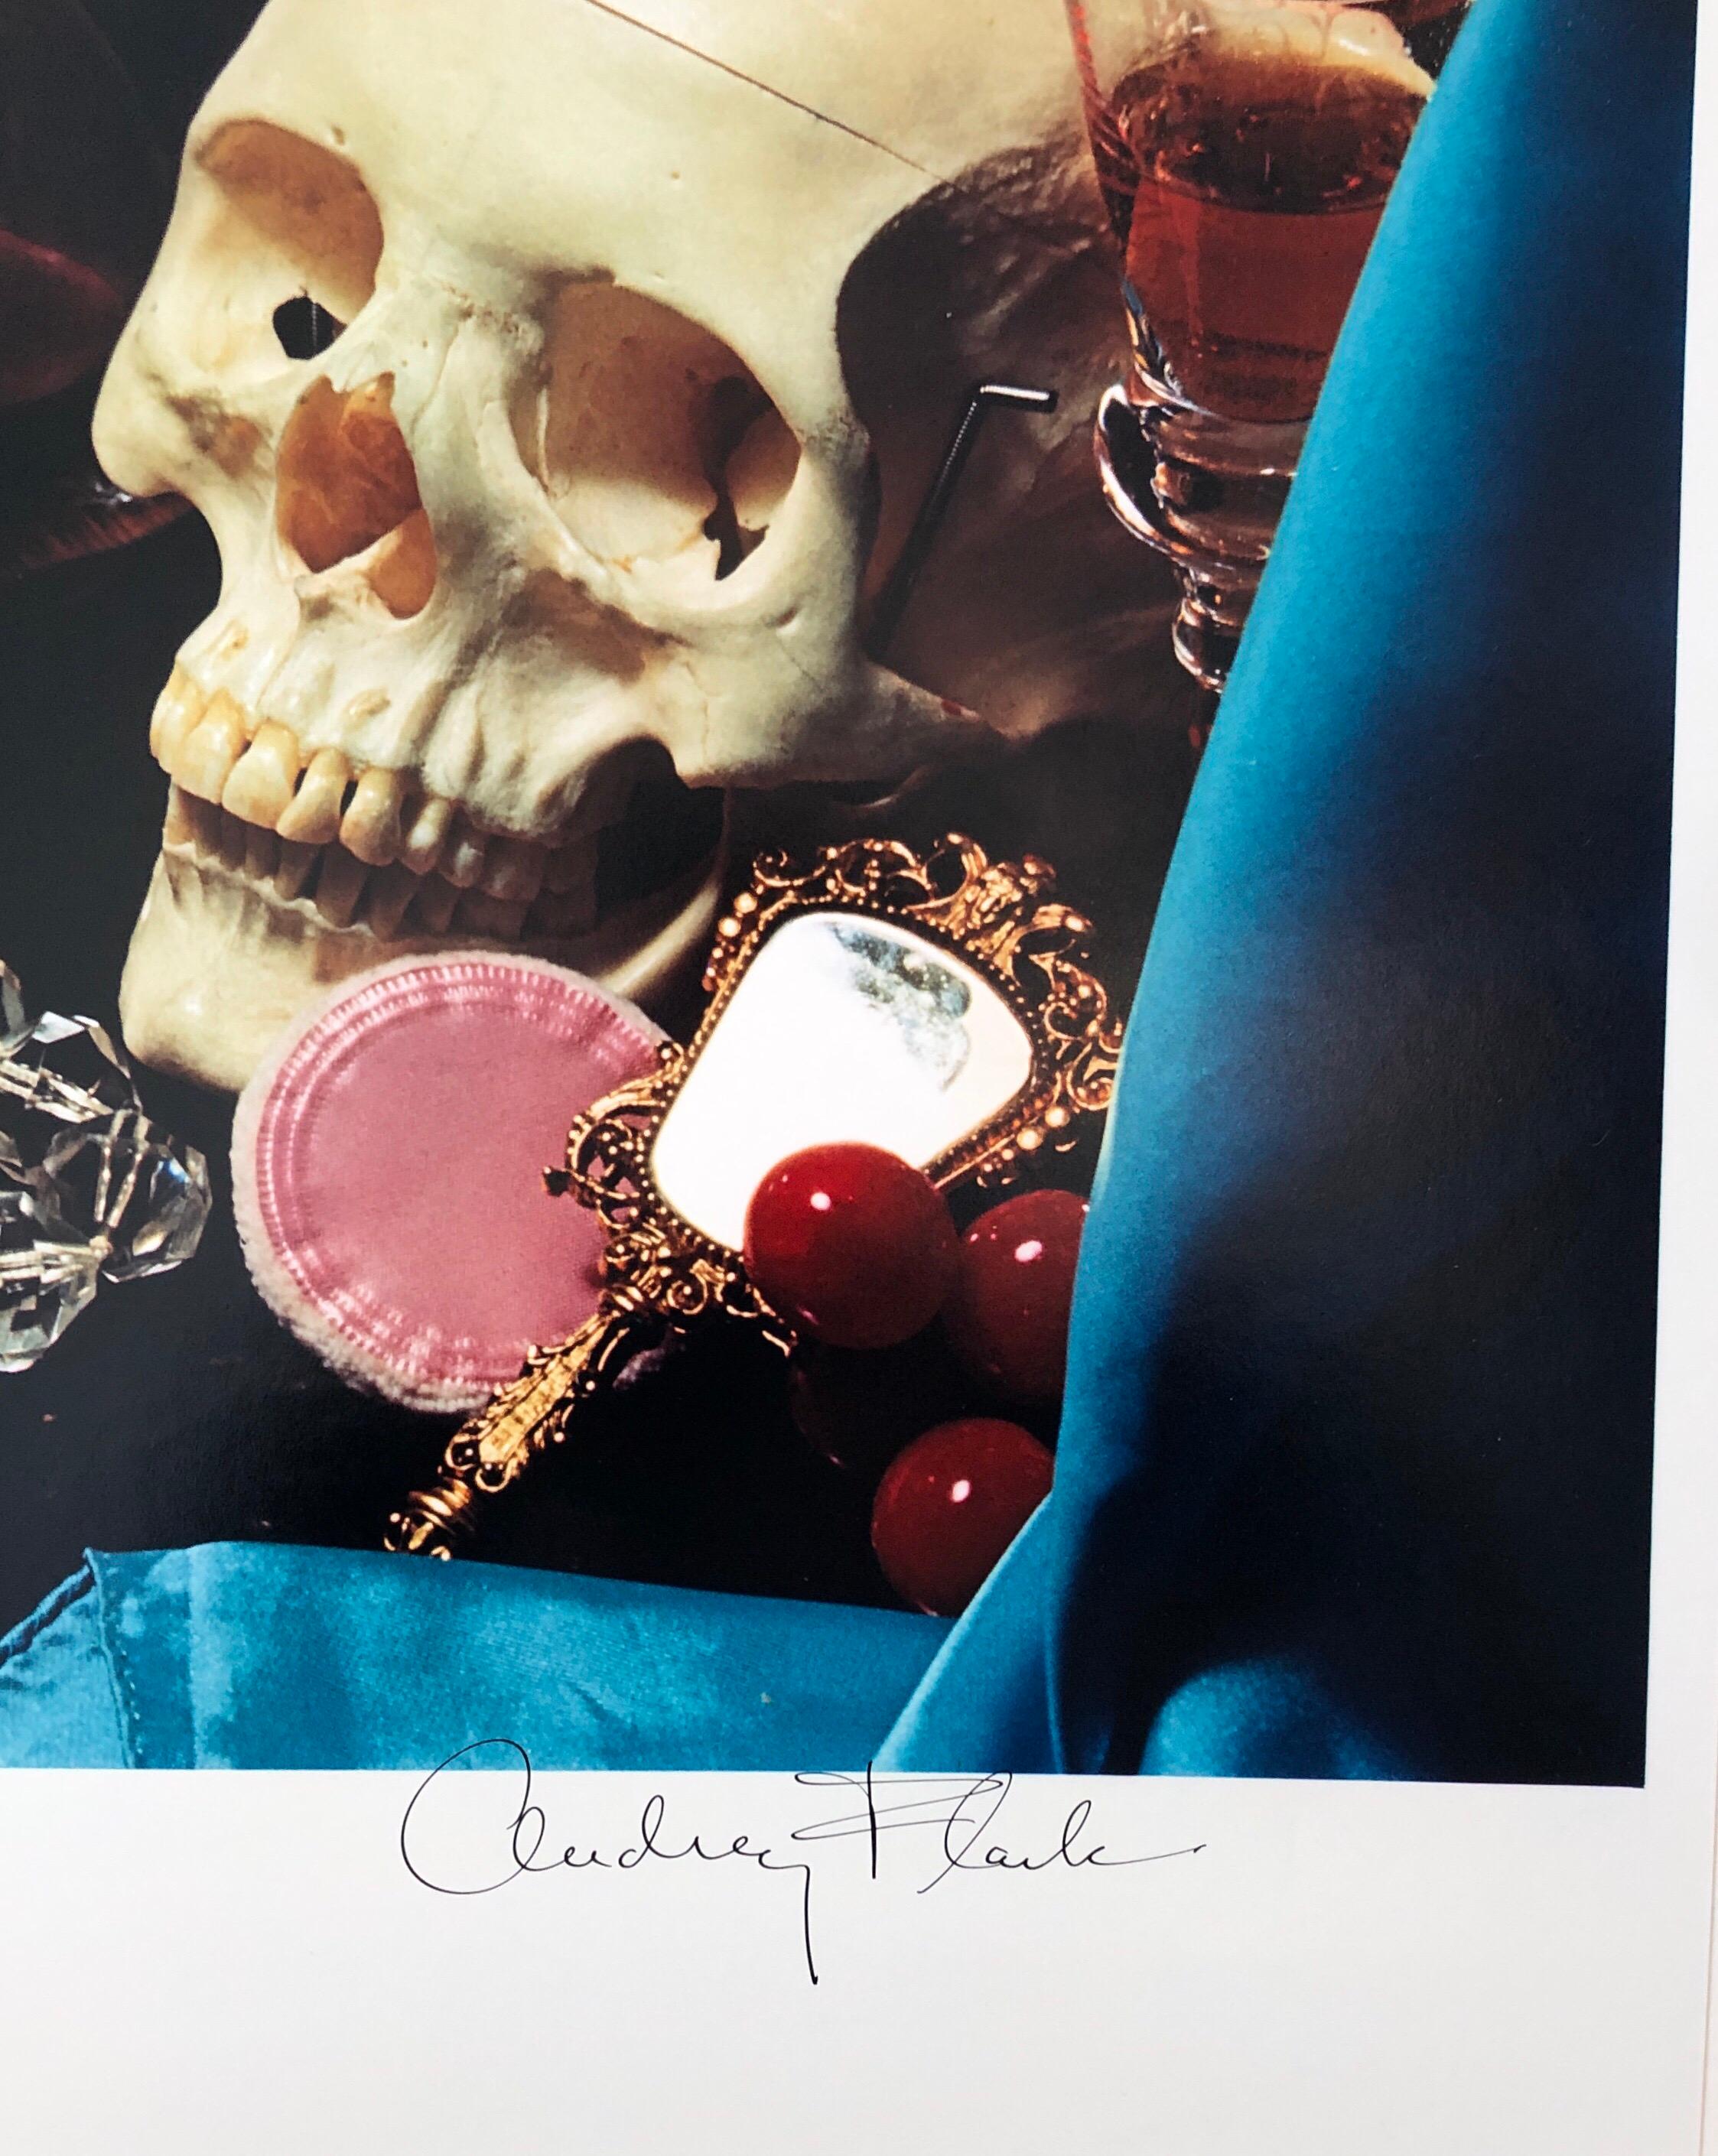 Pop Art Color Photograph Dye Transfer Print Audrey Flack Tarot Card, Skull Photo For Sale 2